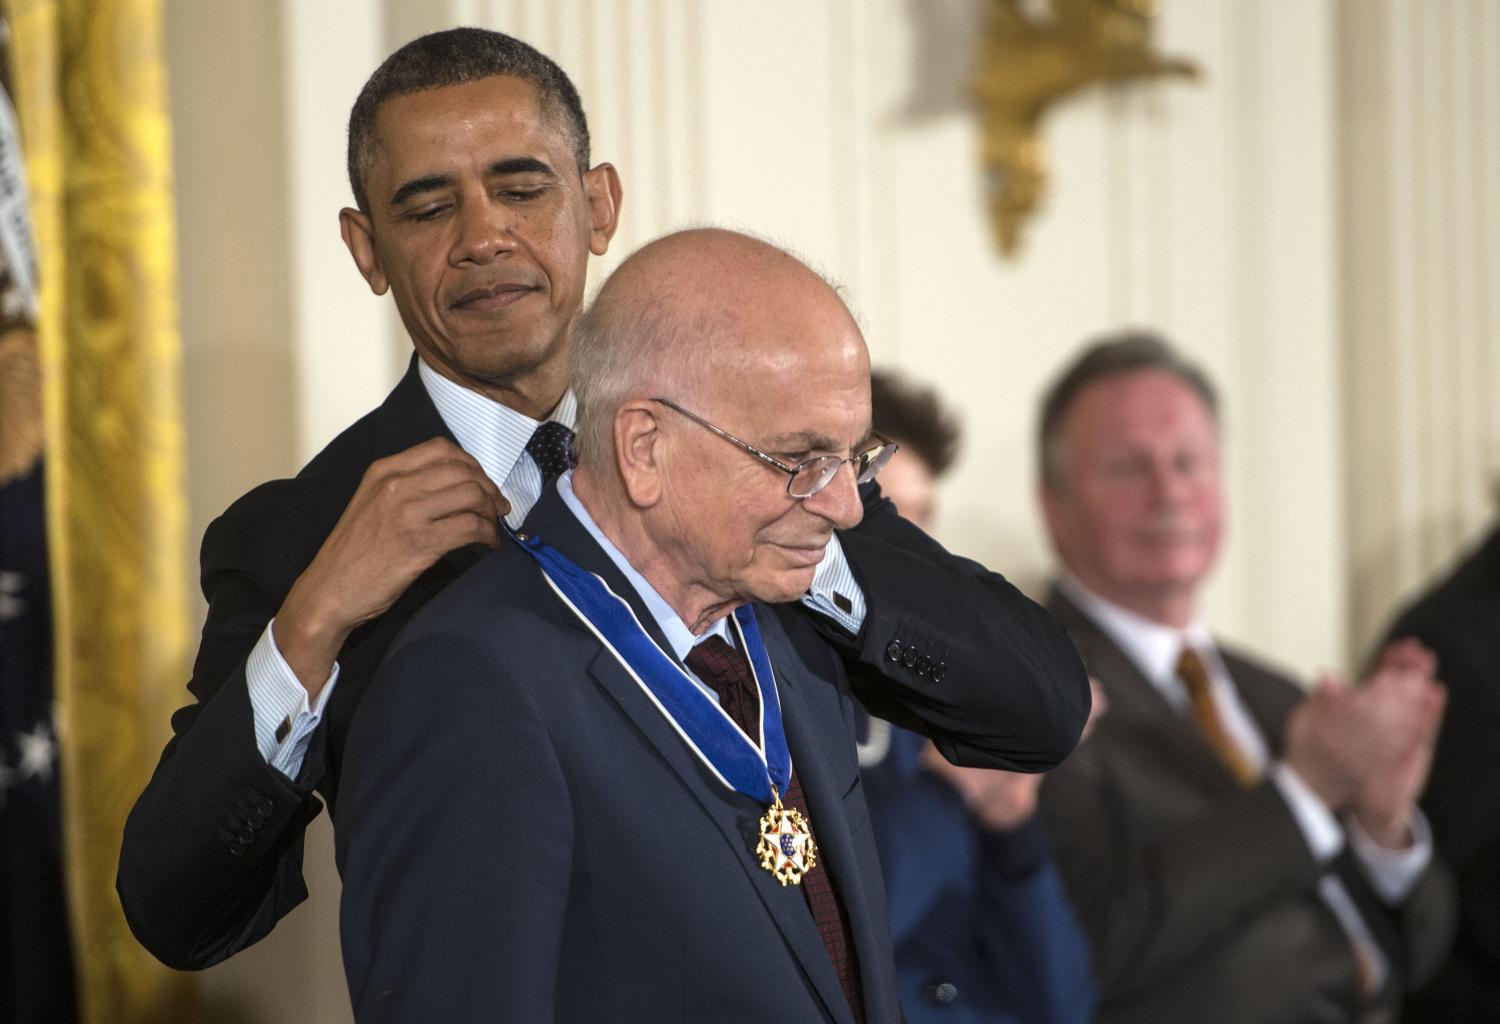 Daniel Kahneman receives the Presidential Medal of Freedom from US President Barack Obama in the White House on 20 November 2013. (Getty/Leigh Vogel)